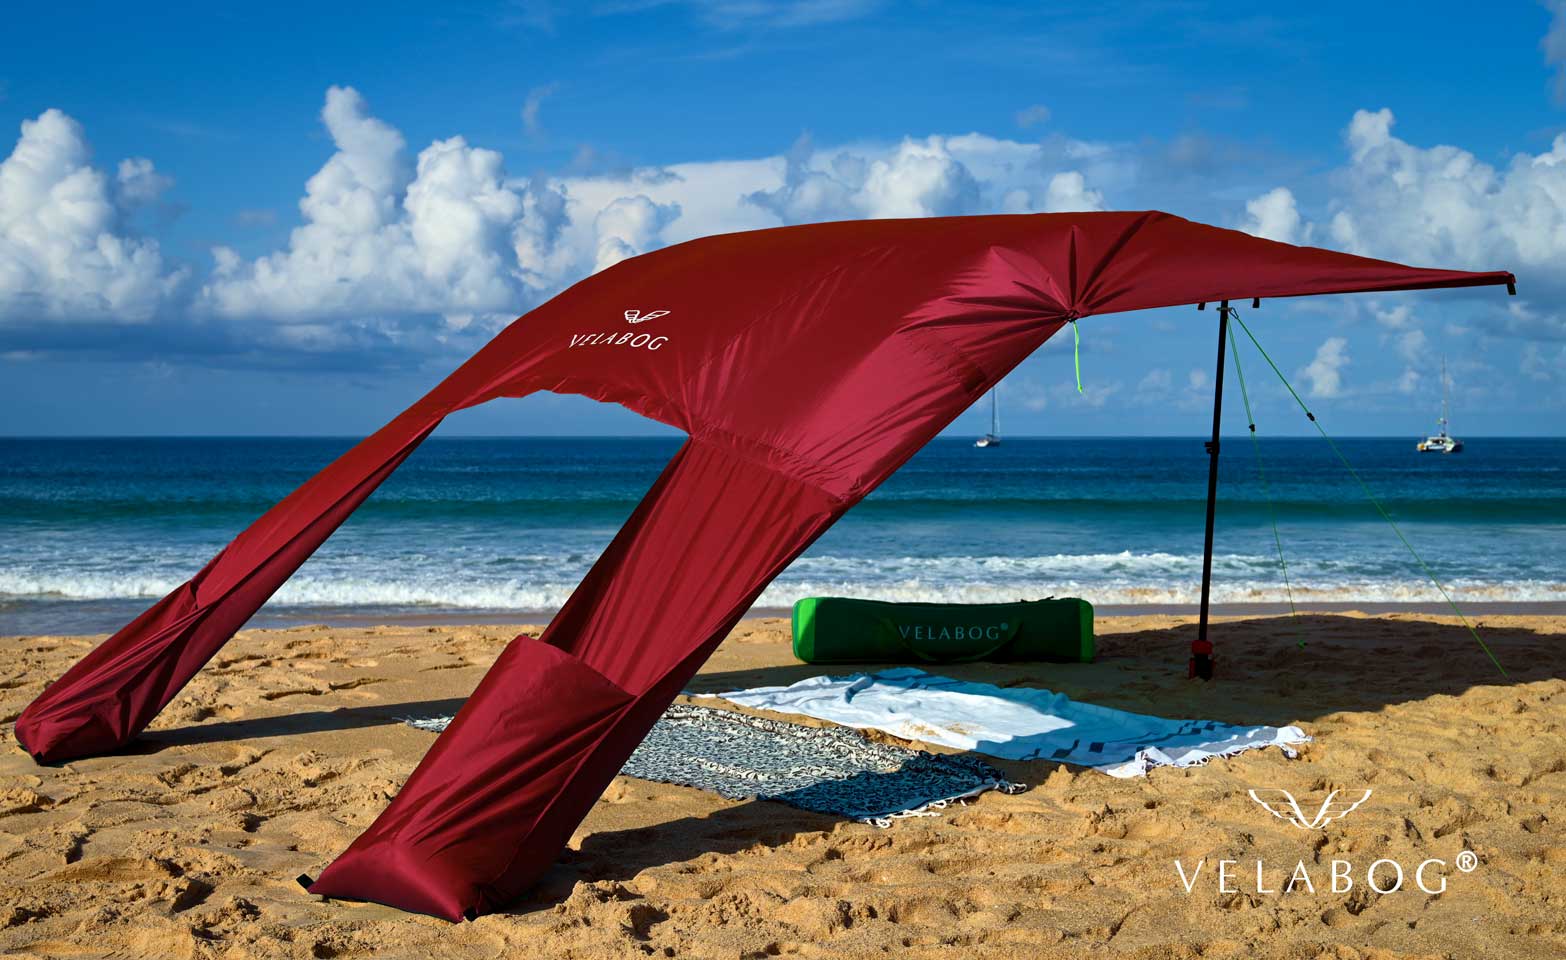 Best Sun Shelter For The Beach Pictures Velabog